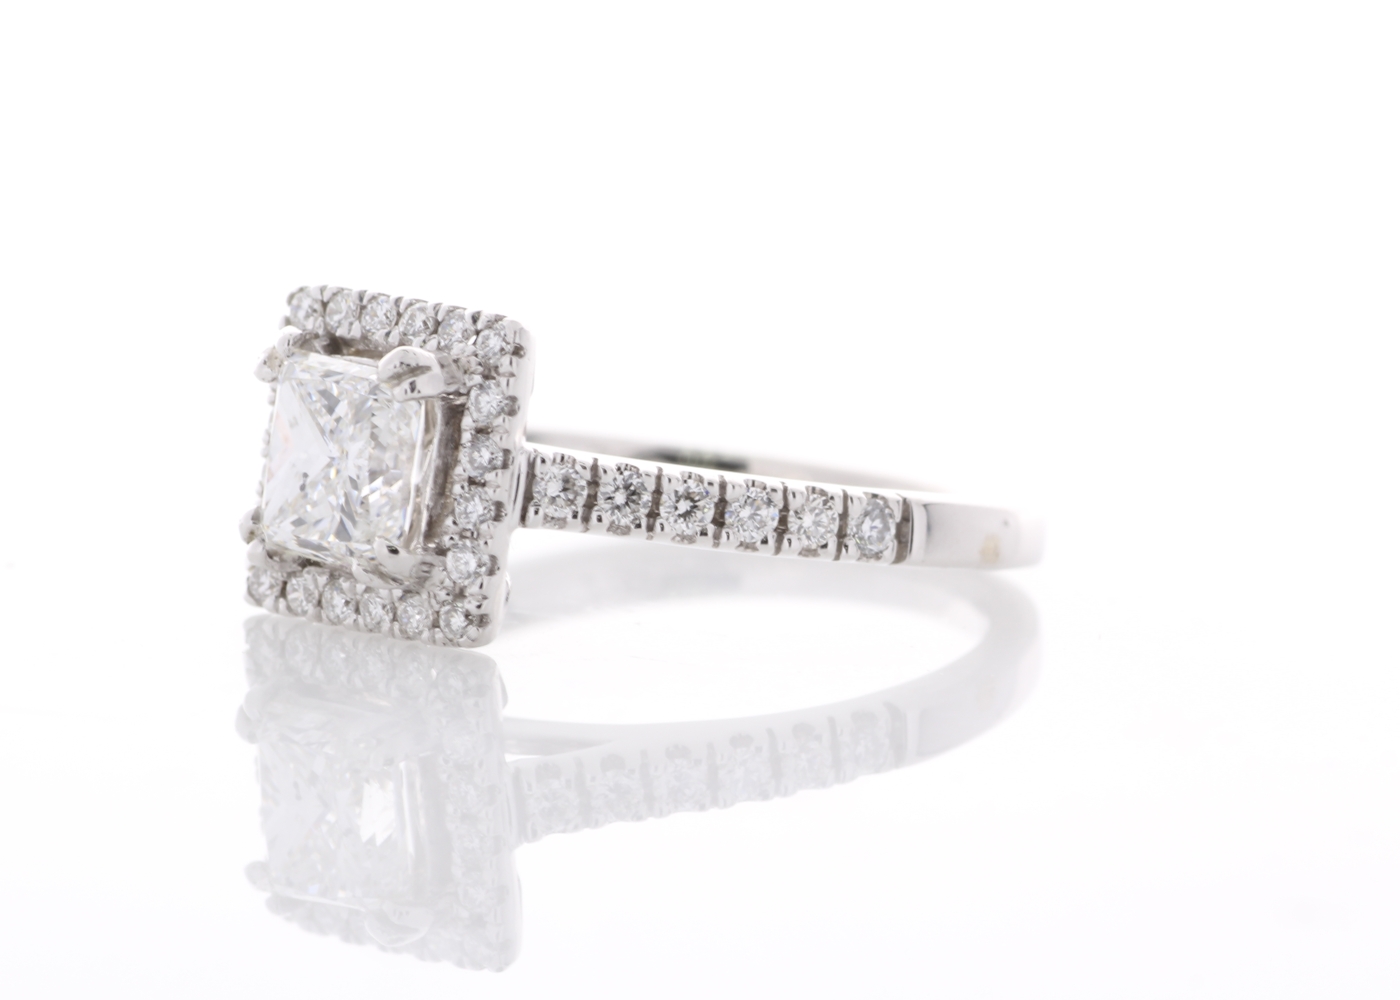 18ct White Gold Princess Cut Diamond Ring 1.34 Carats - Image 2 of 5